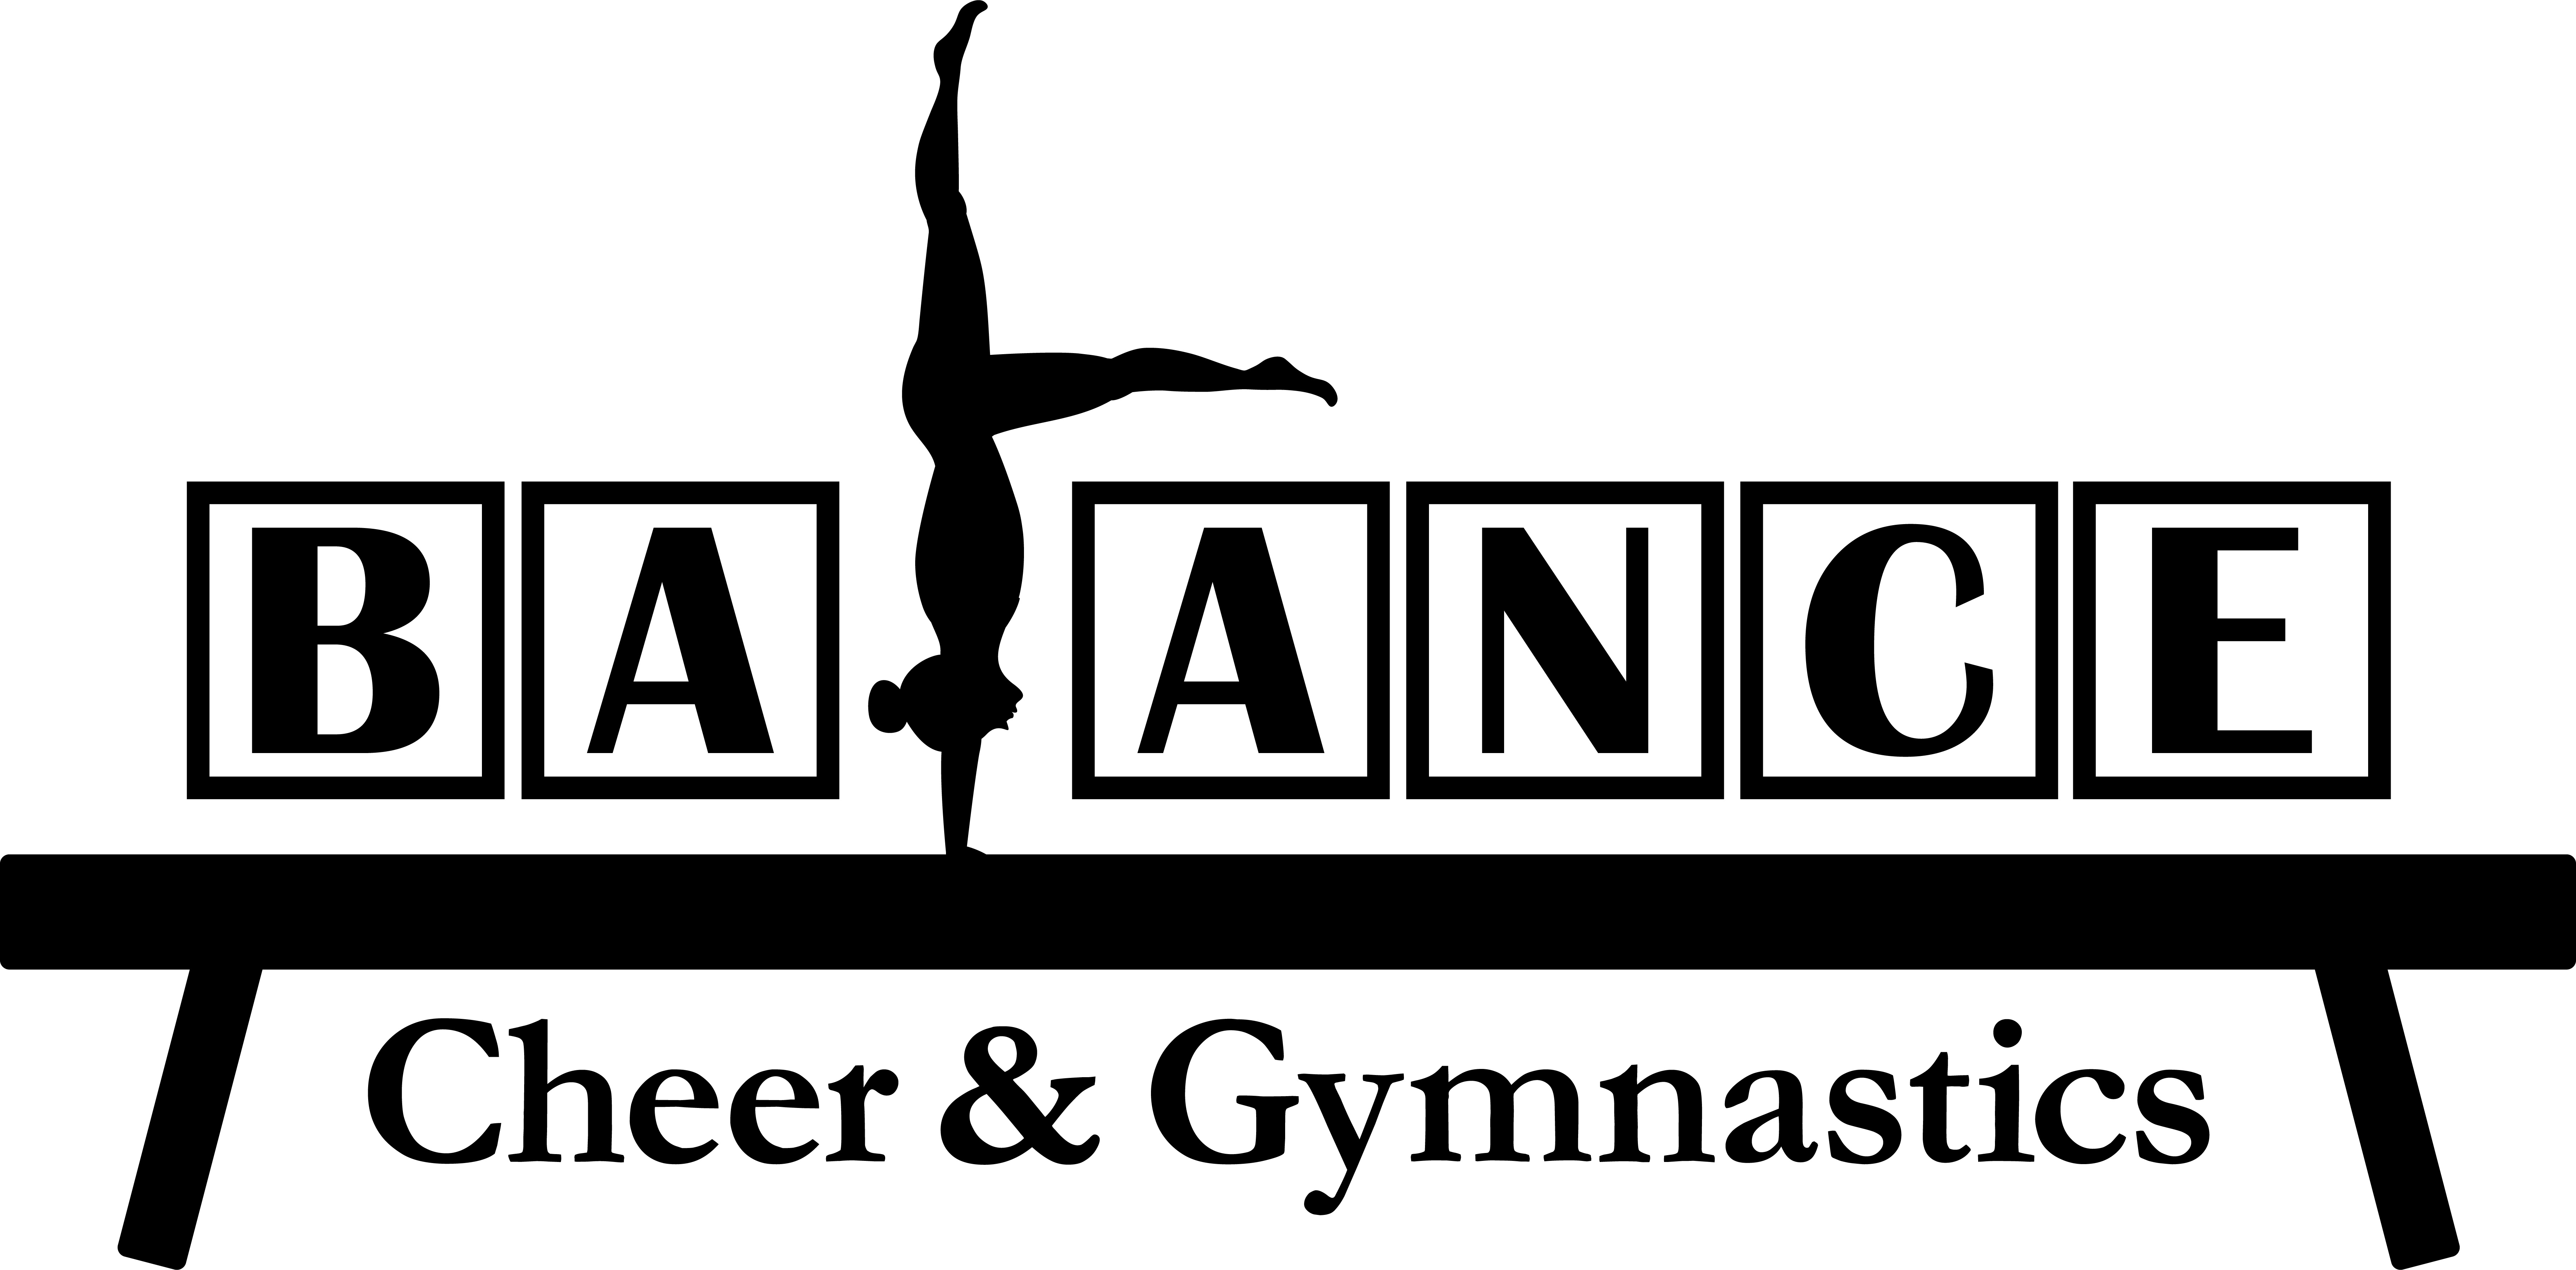 Balance Cheer and Gymnastics logo